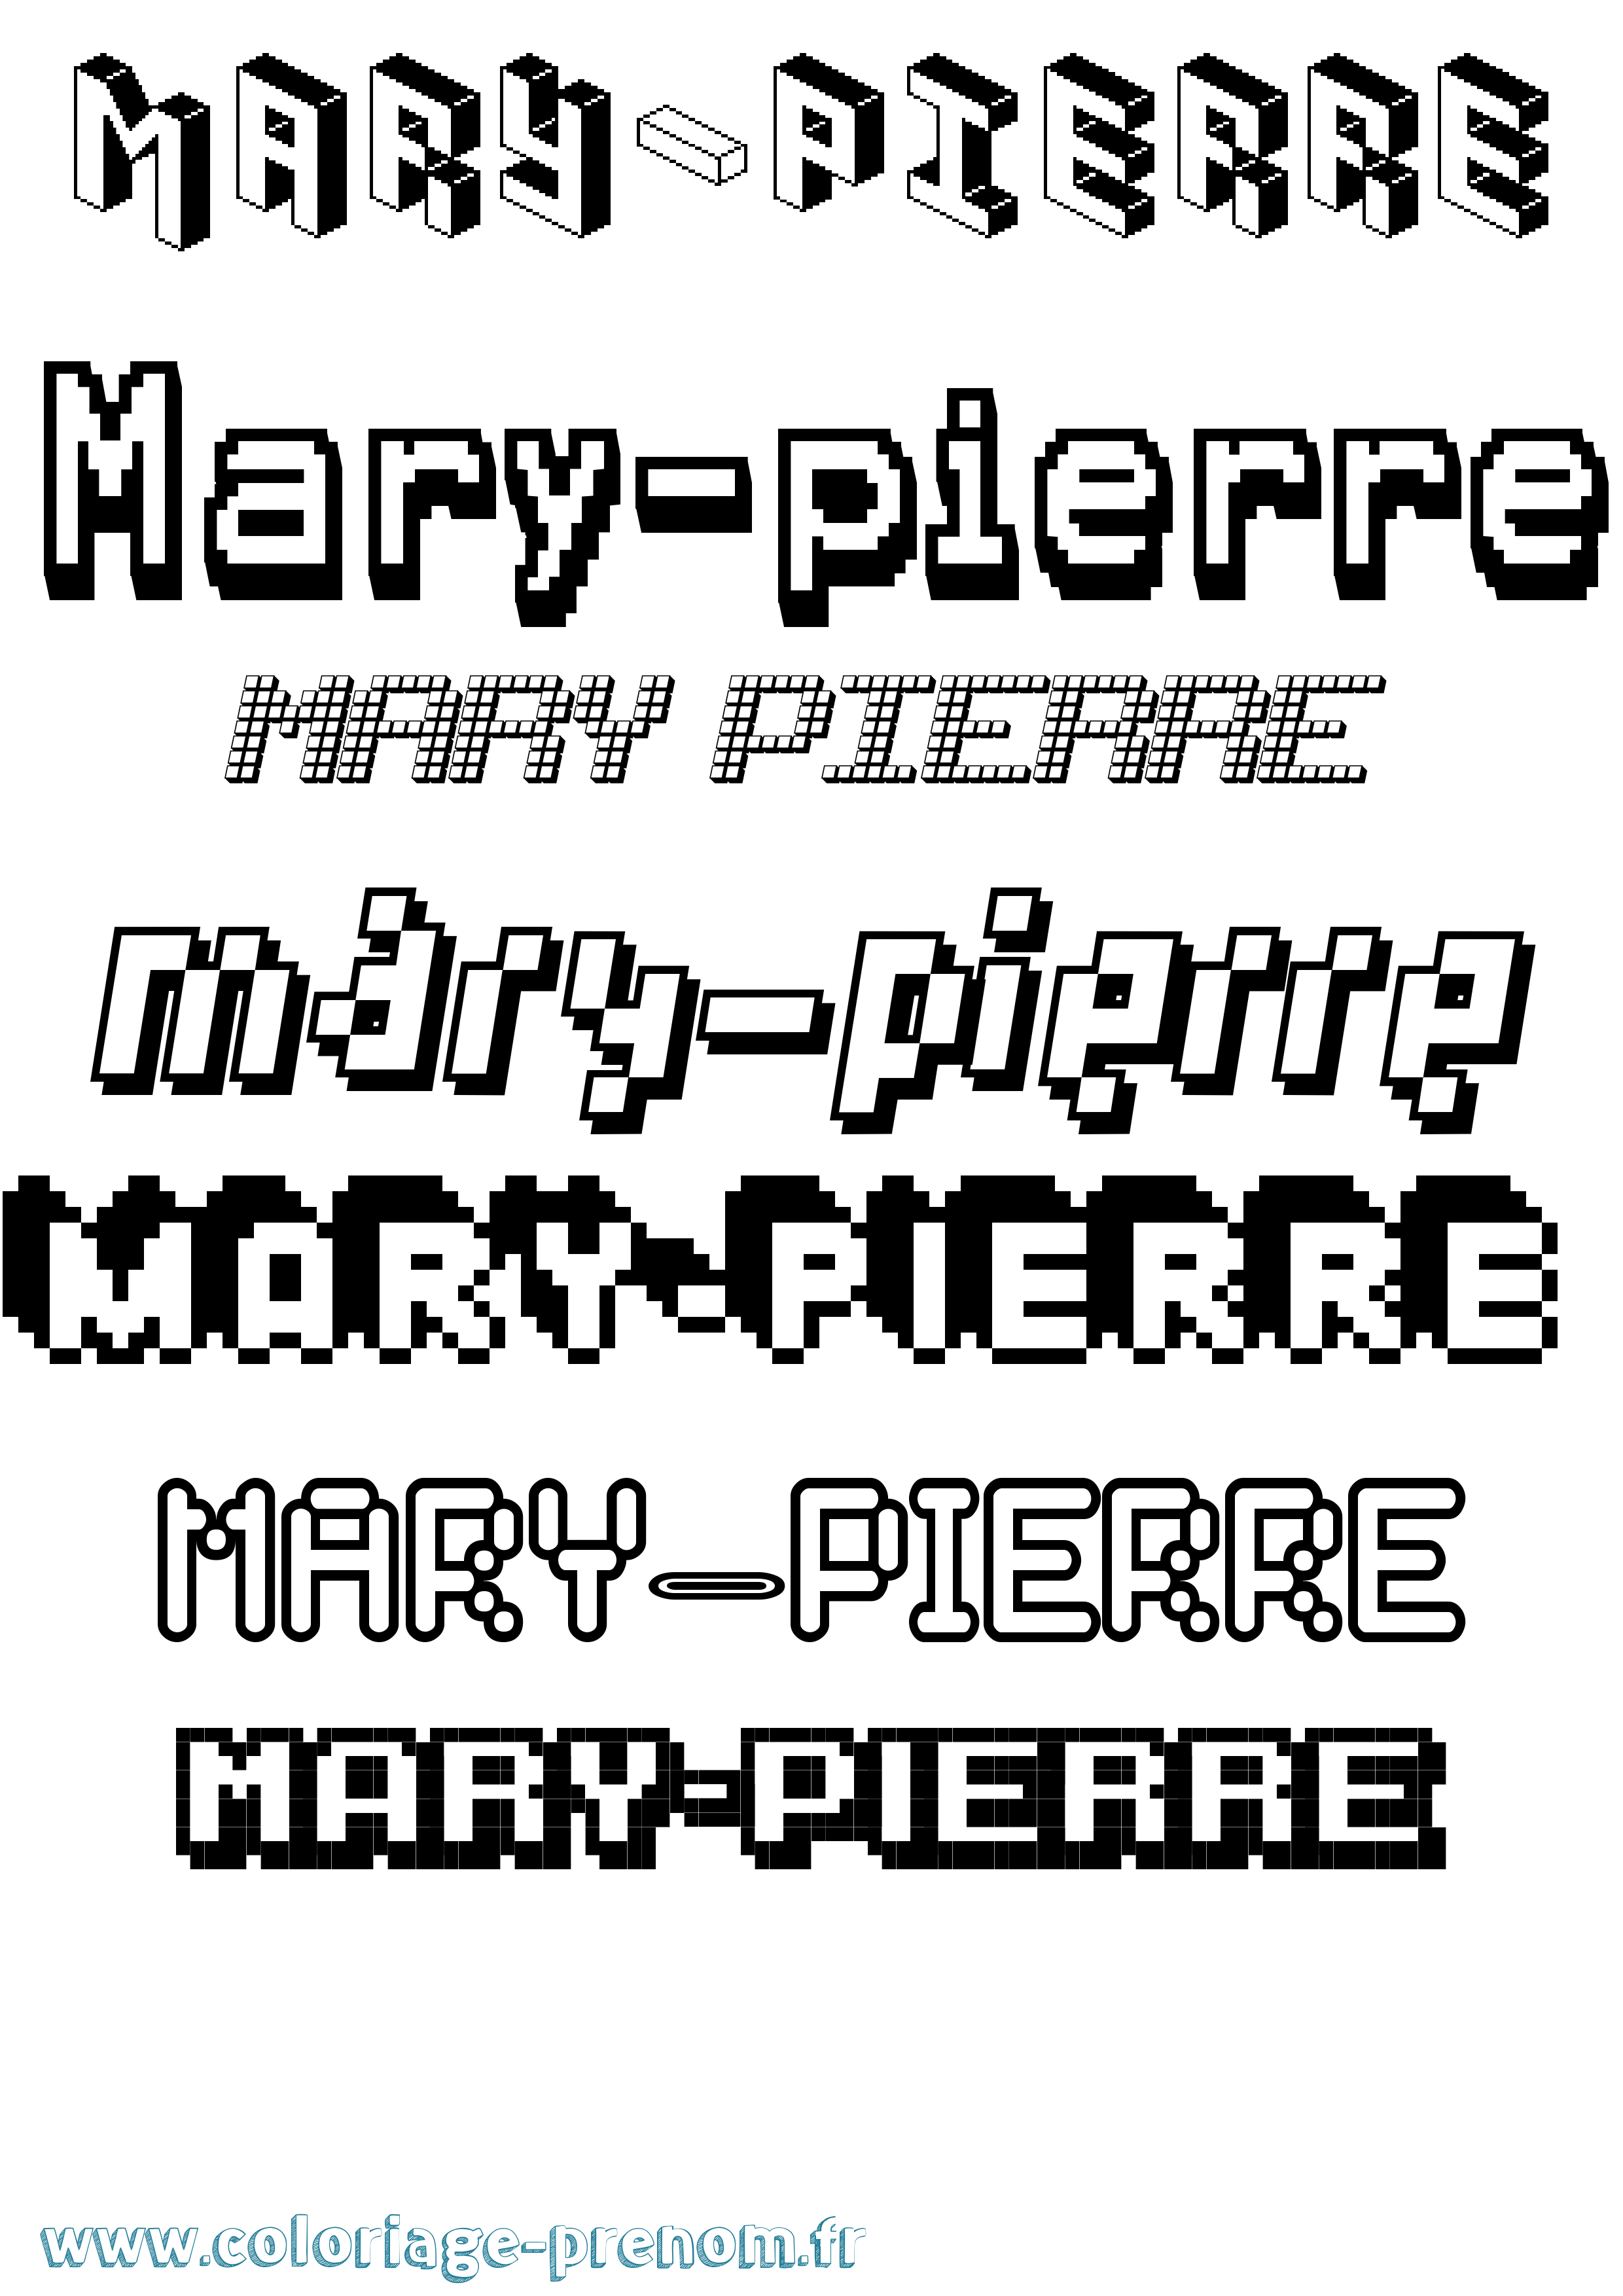 Coloriage prénom Mary-Pierre Pixel